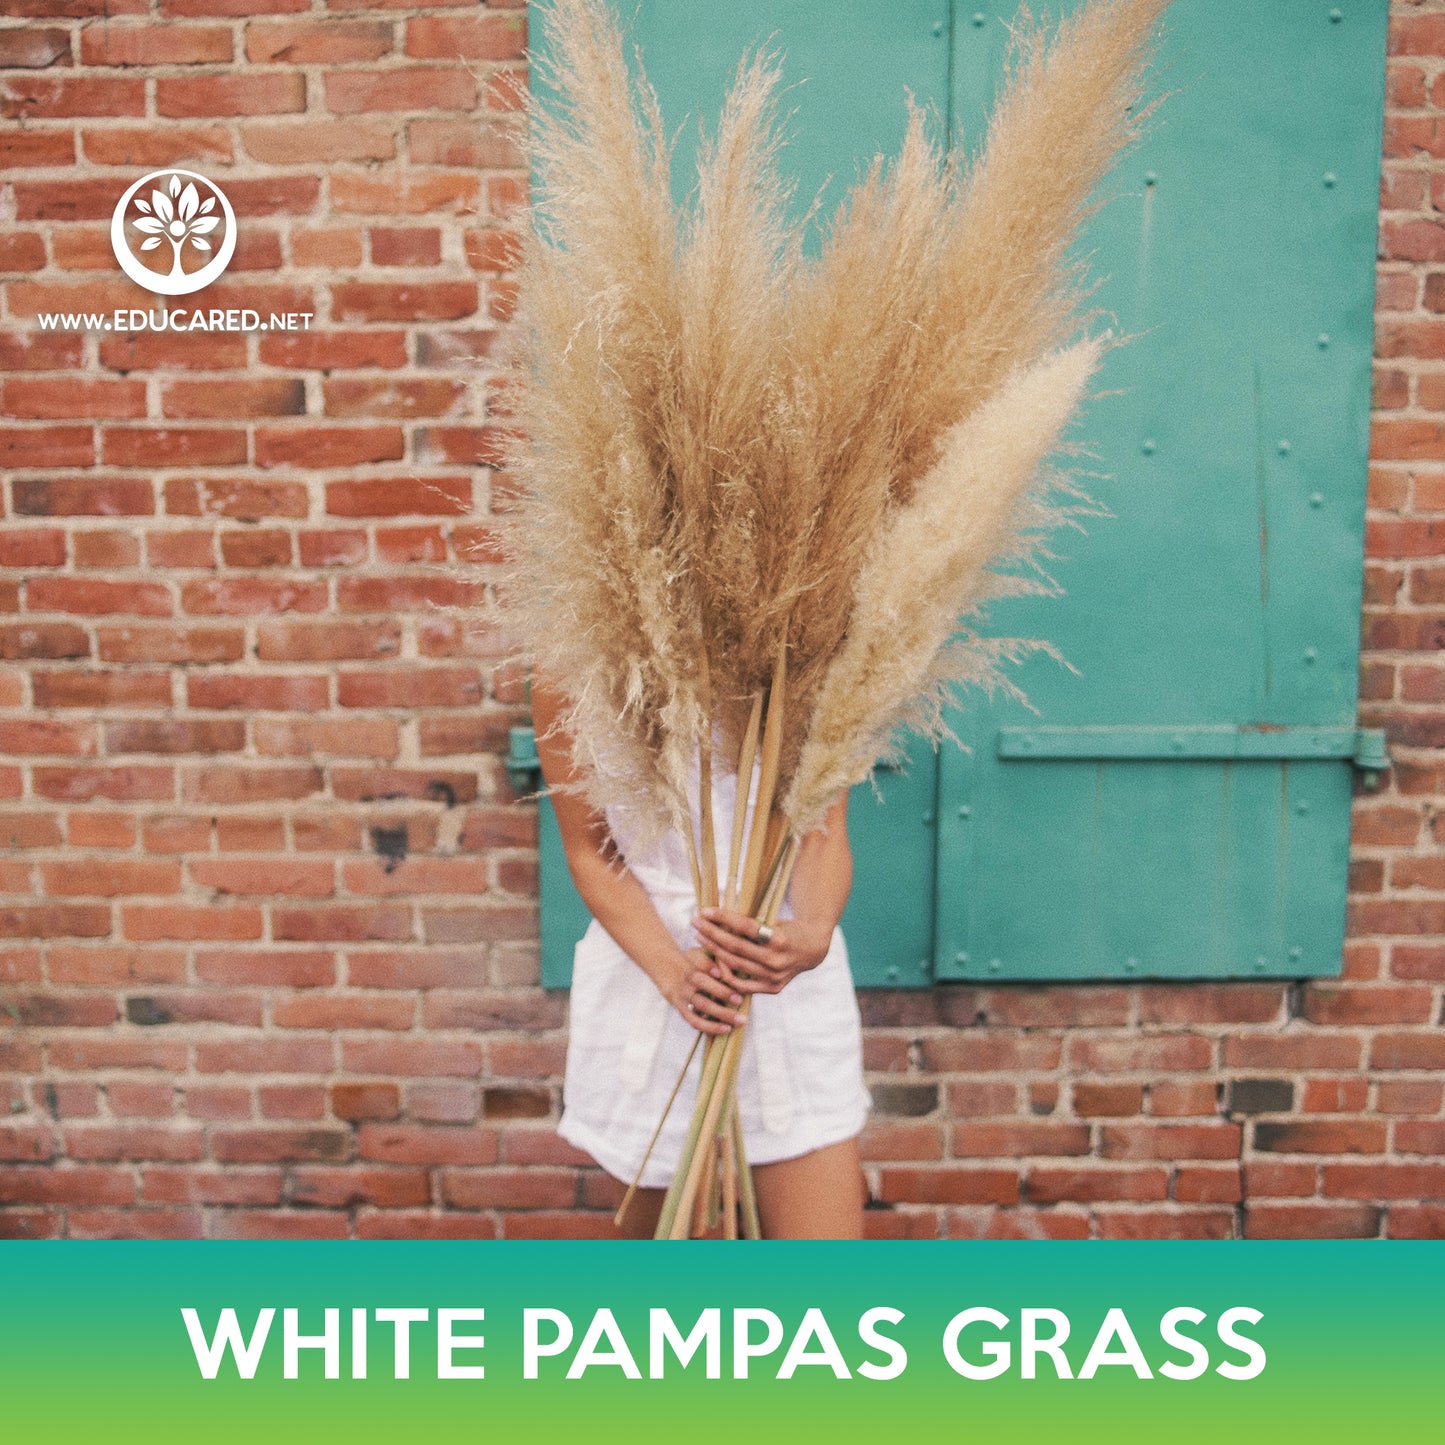 White Pampas Grass Seeds